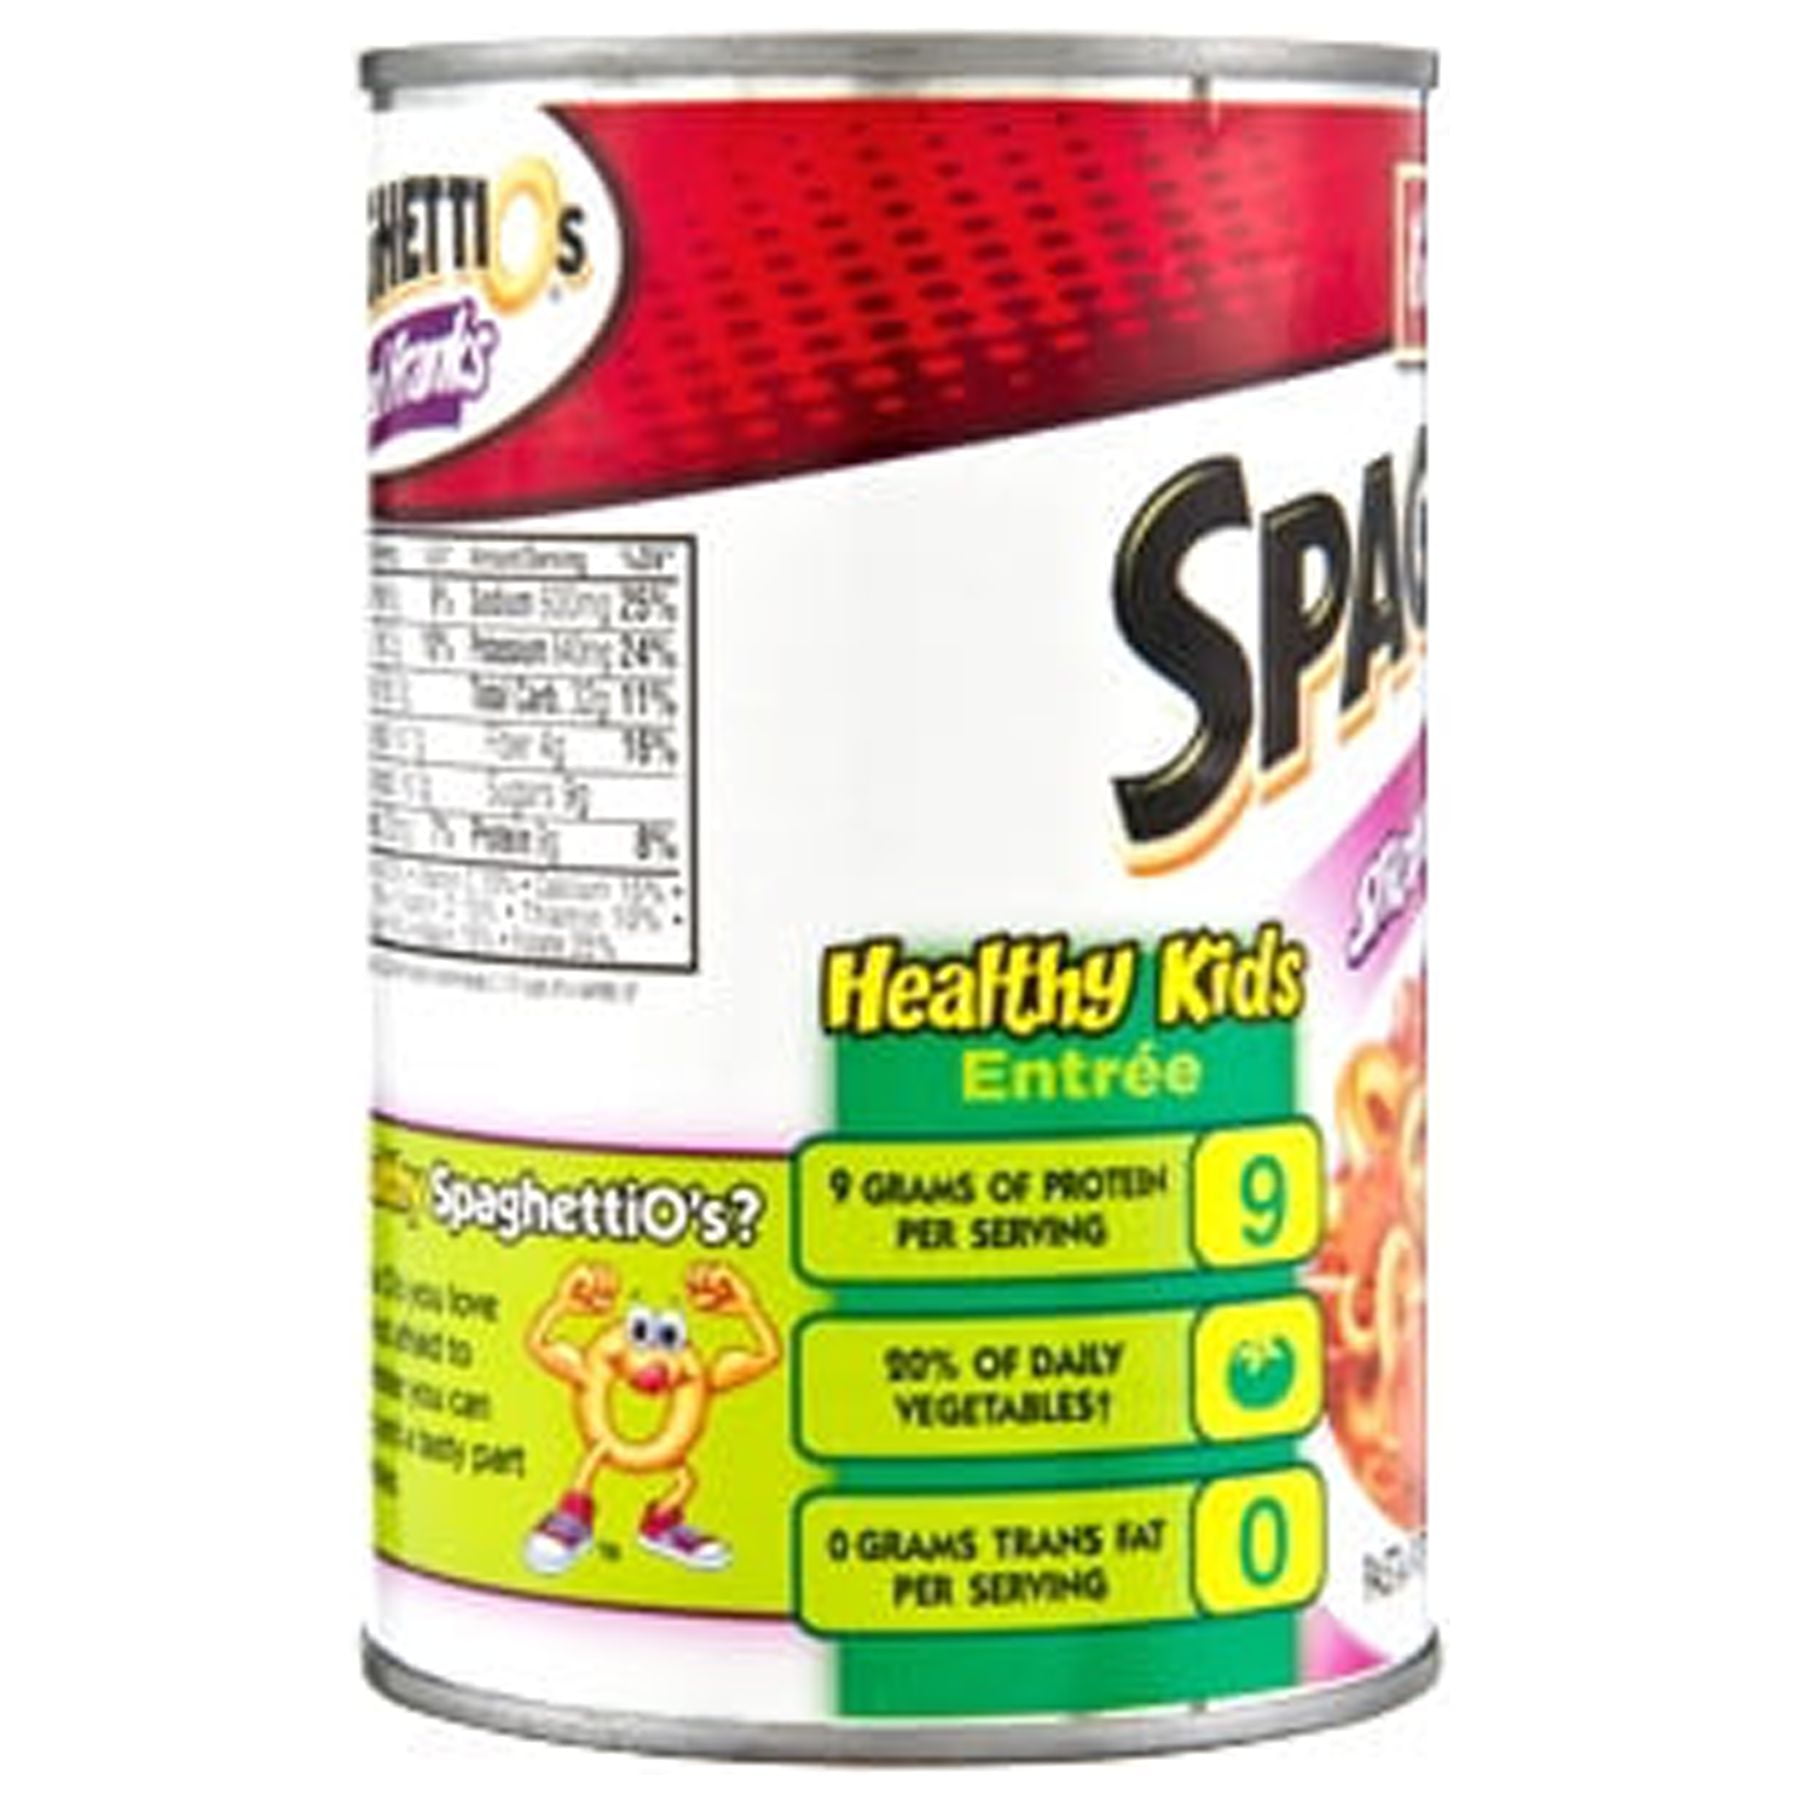 Spaghettios W Sliced Franks 15.6 oz [6162013dk] - $3.78 : Mailbox